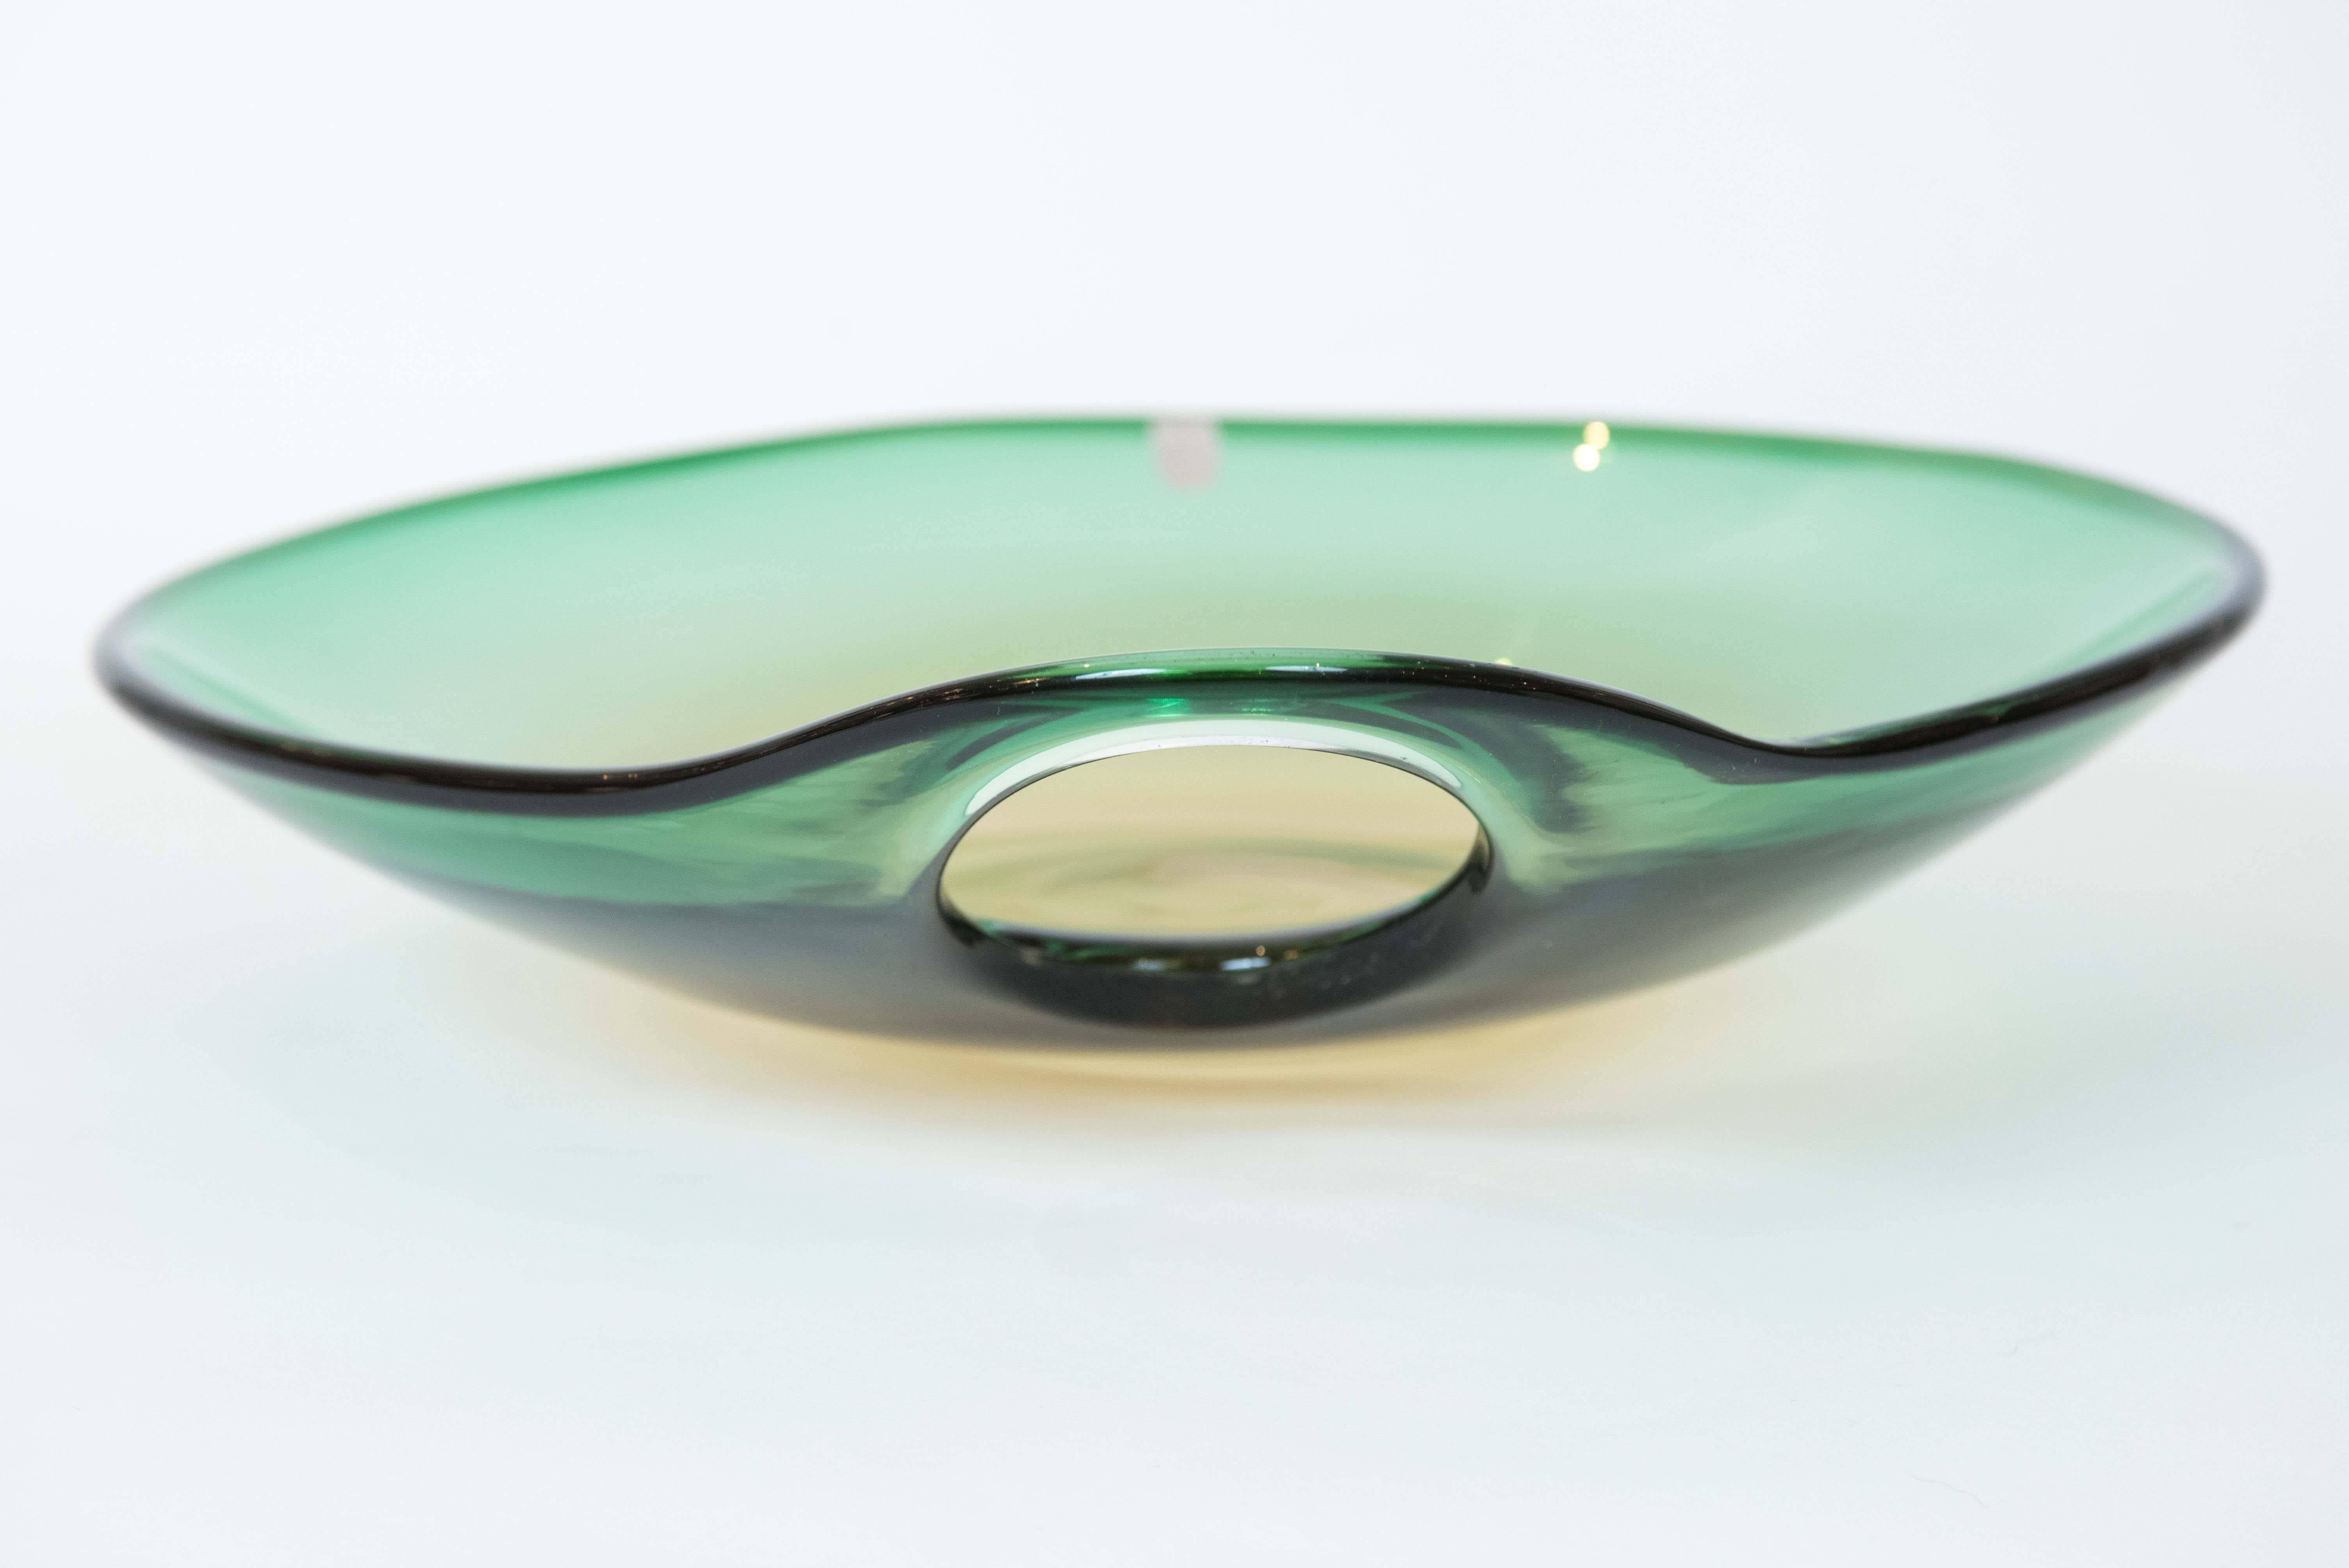 This award winning biomorphic bowl by Seguso bears the original.
